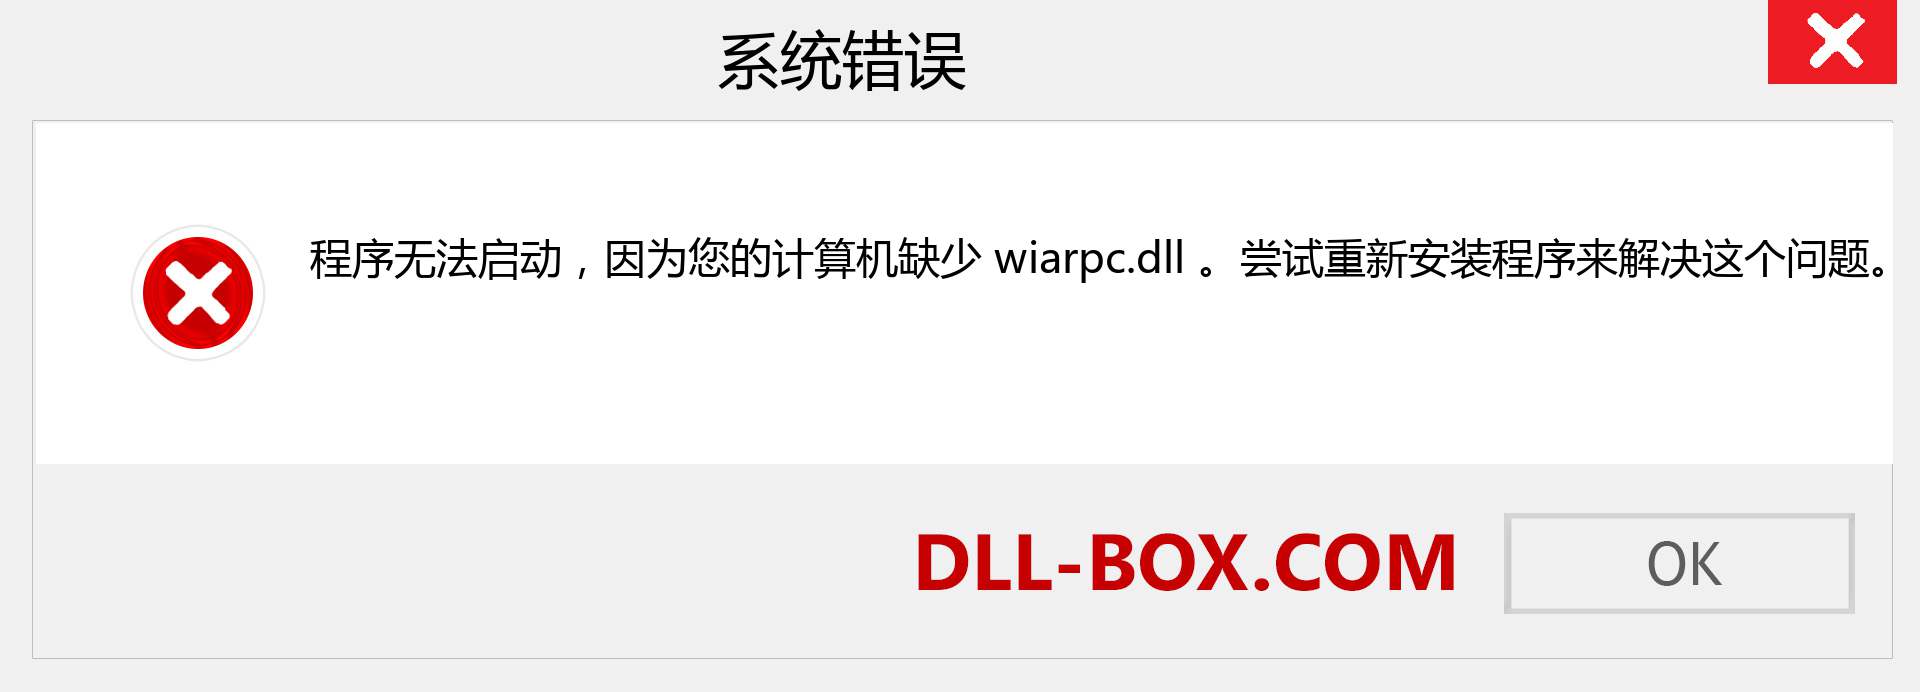 wiarpc.dll 文件丢失？。 适用于 Windows 7、8、10 的下载 - 修复 Windows、照片、图像上的 wiarpc dll 丢失错误